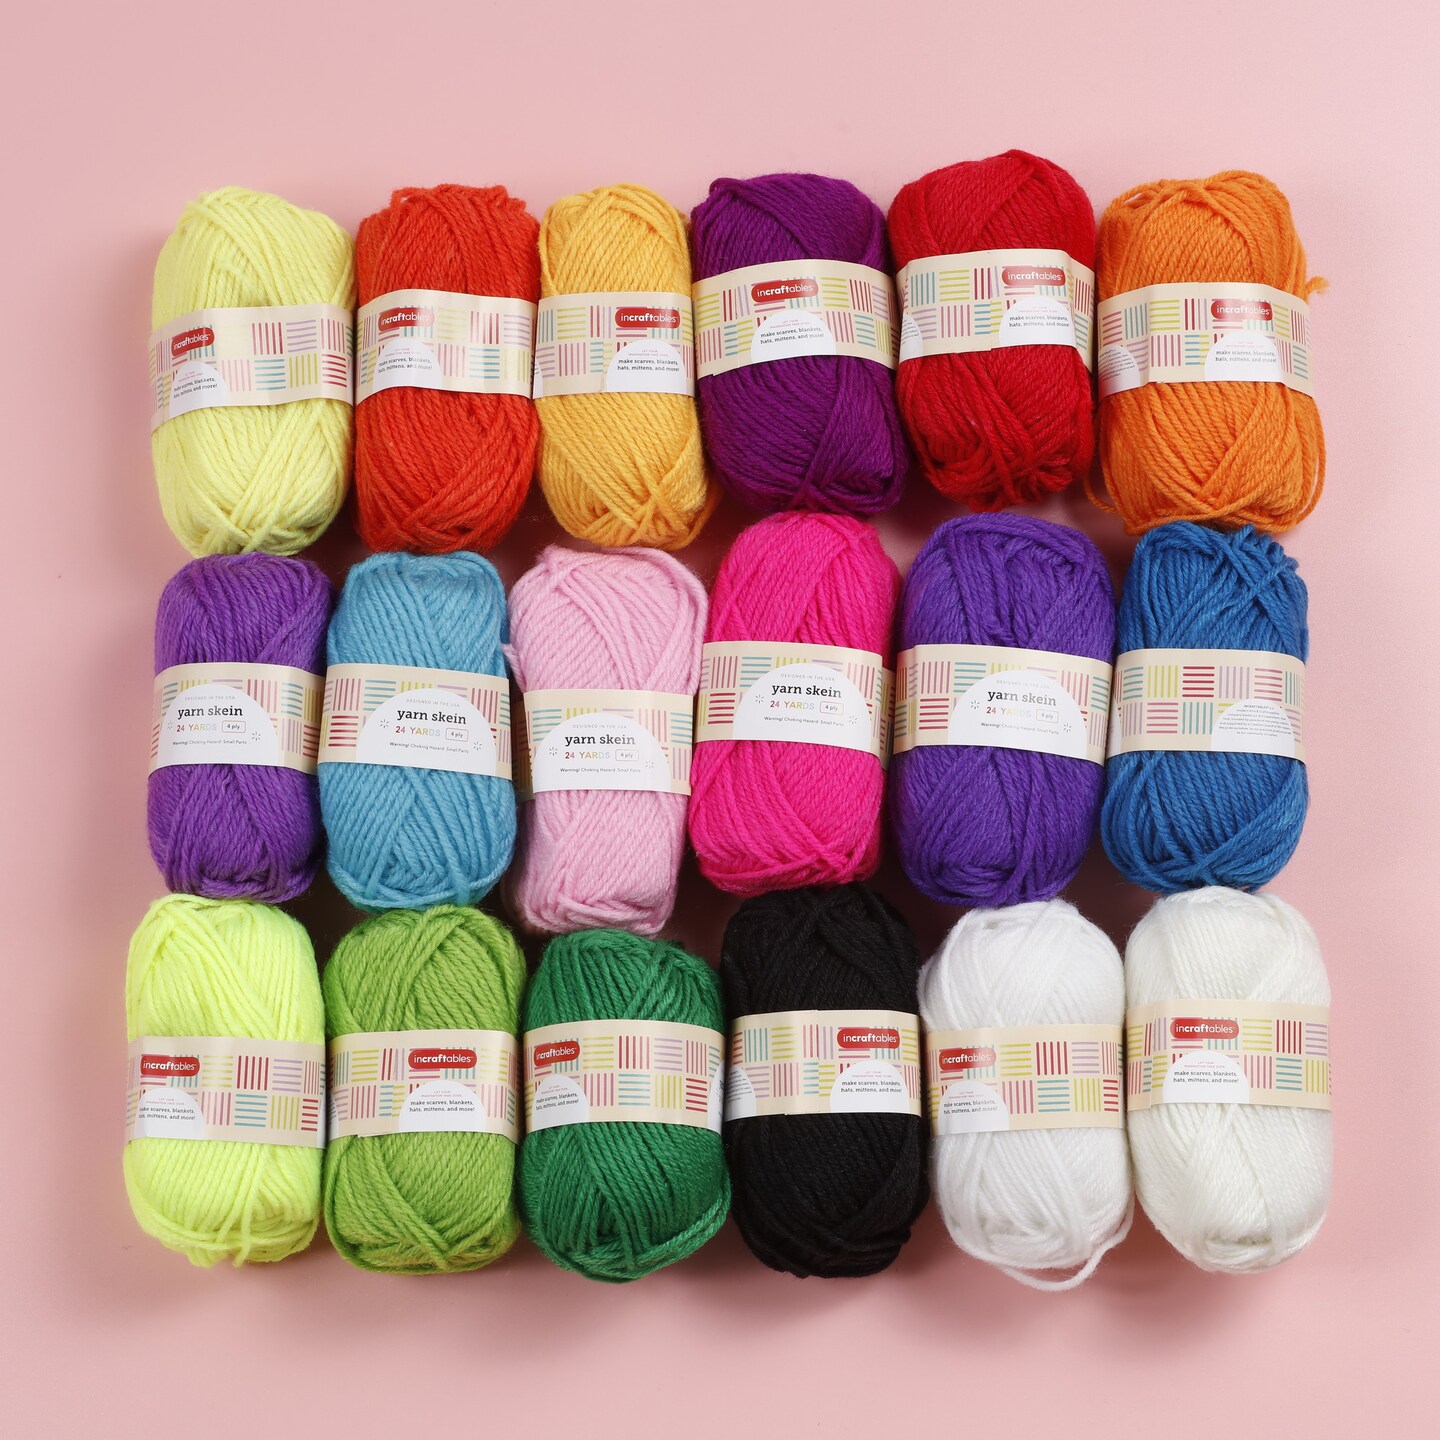 JumblCrafts Crochet Hook Set, 12 Colorful Ergonomic Crochet Hooks for  Beginners and Experts